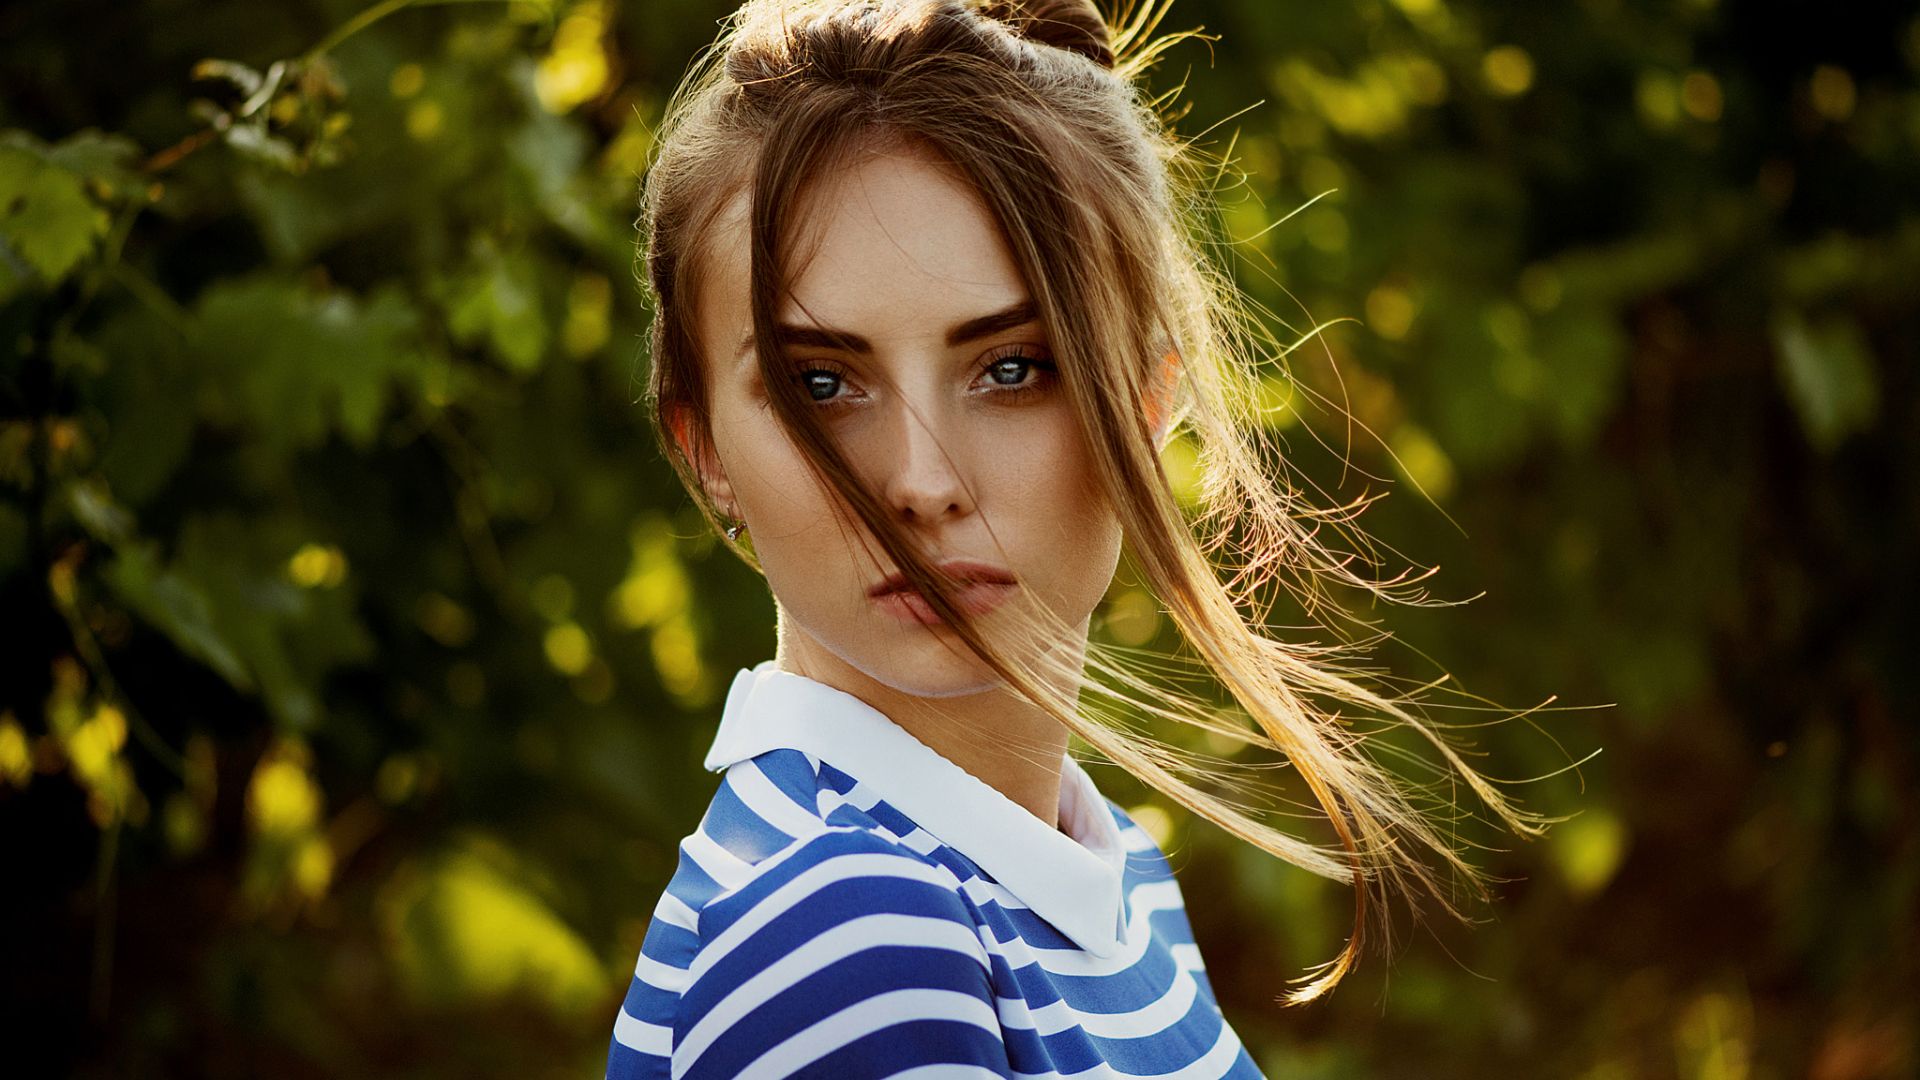 Wallpaper Beautiful, girl model, hair on face, striped t-shirt